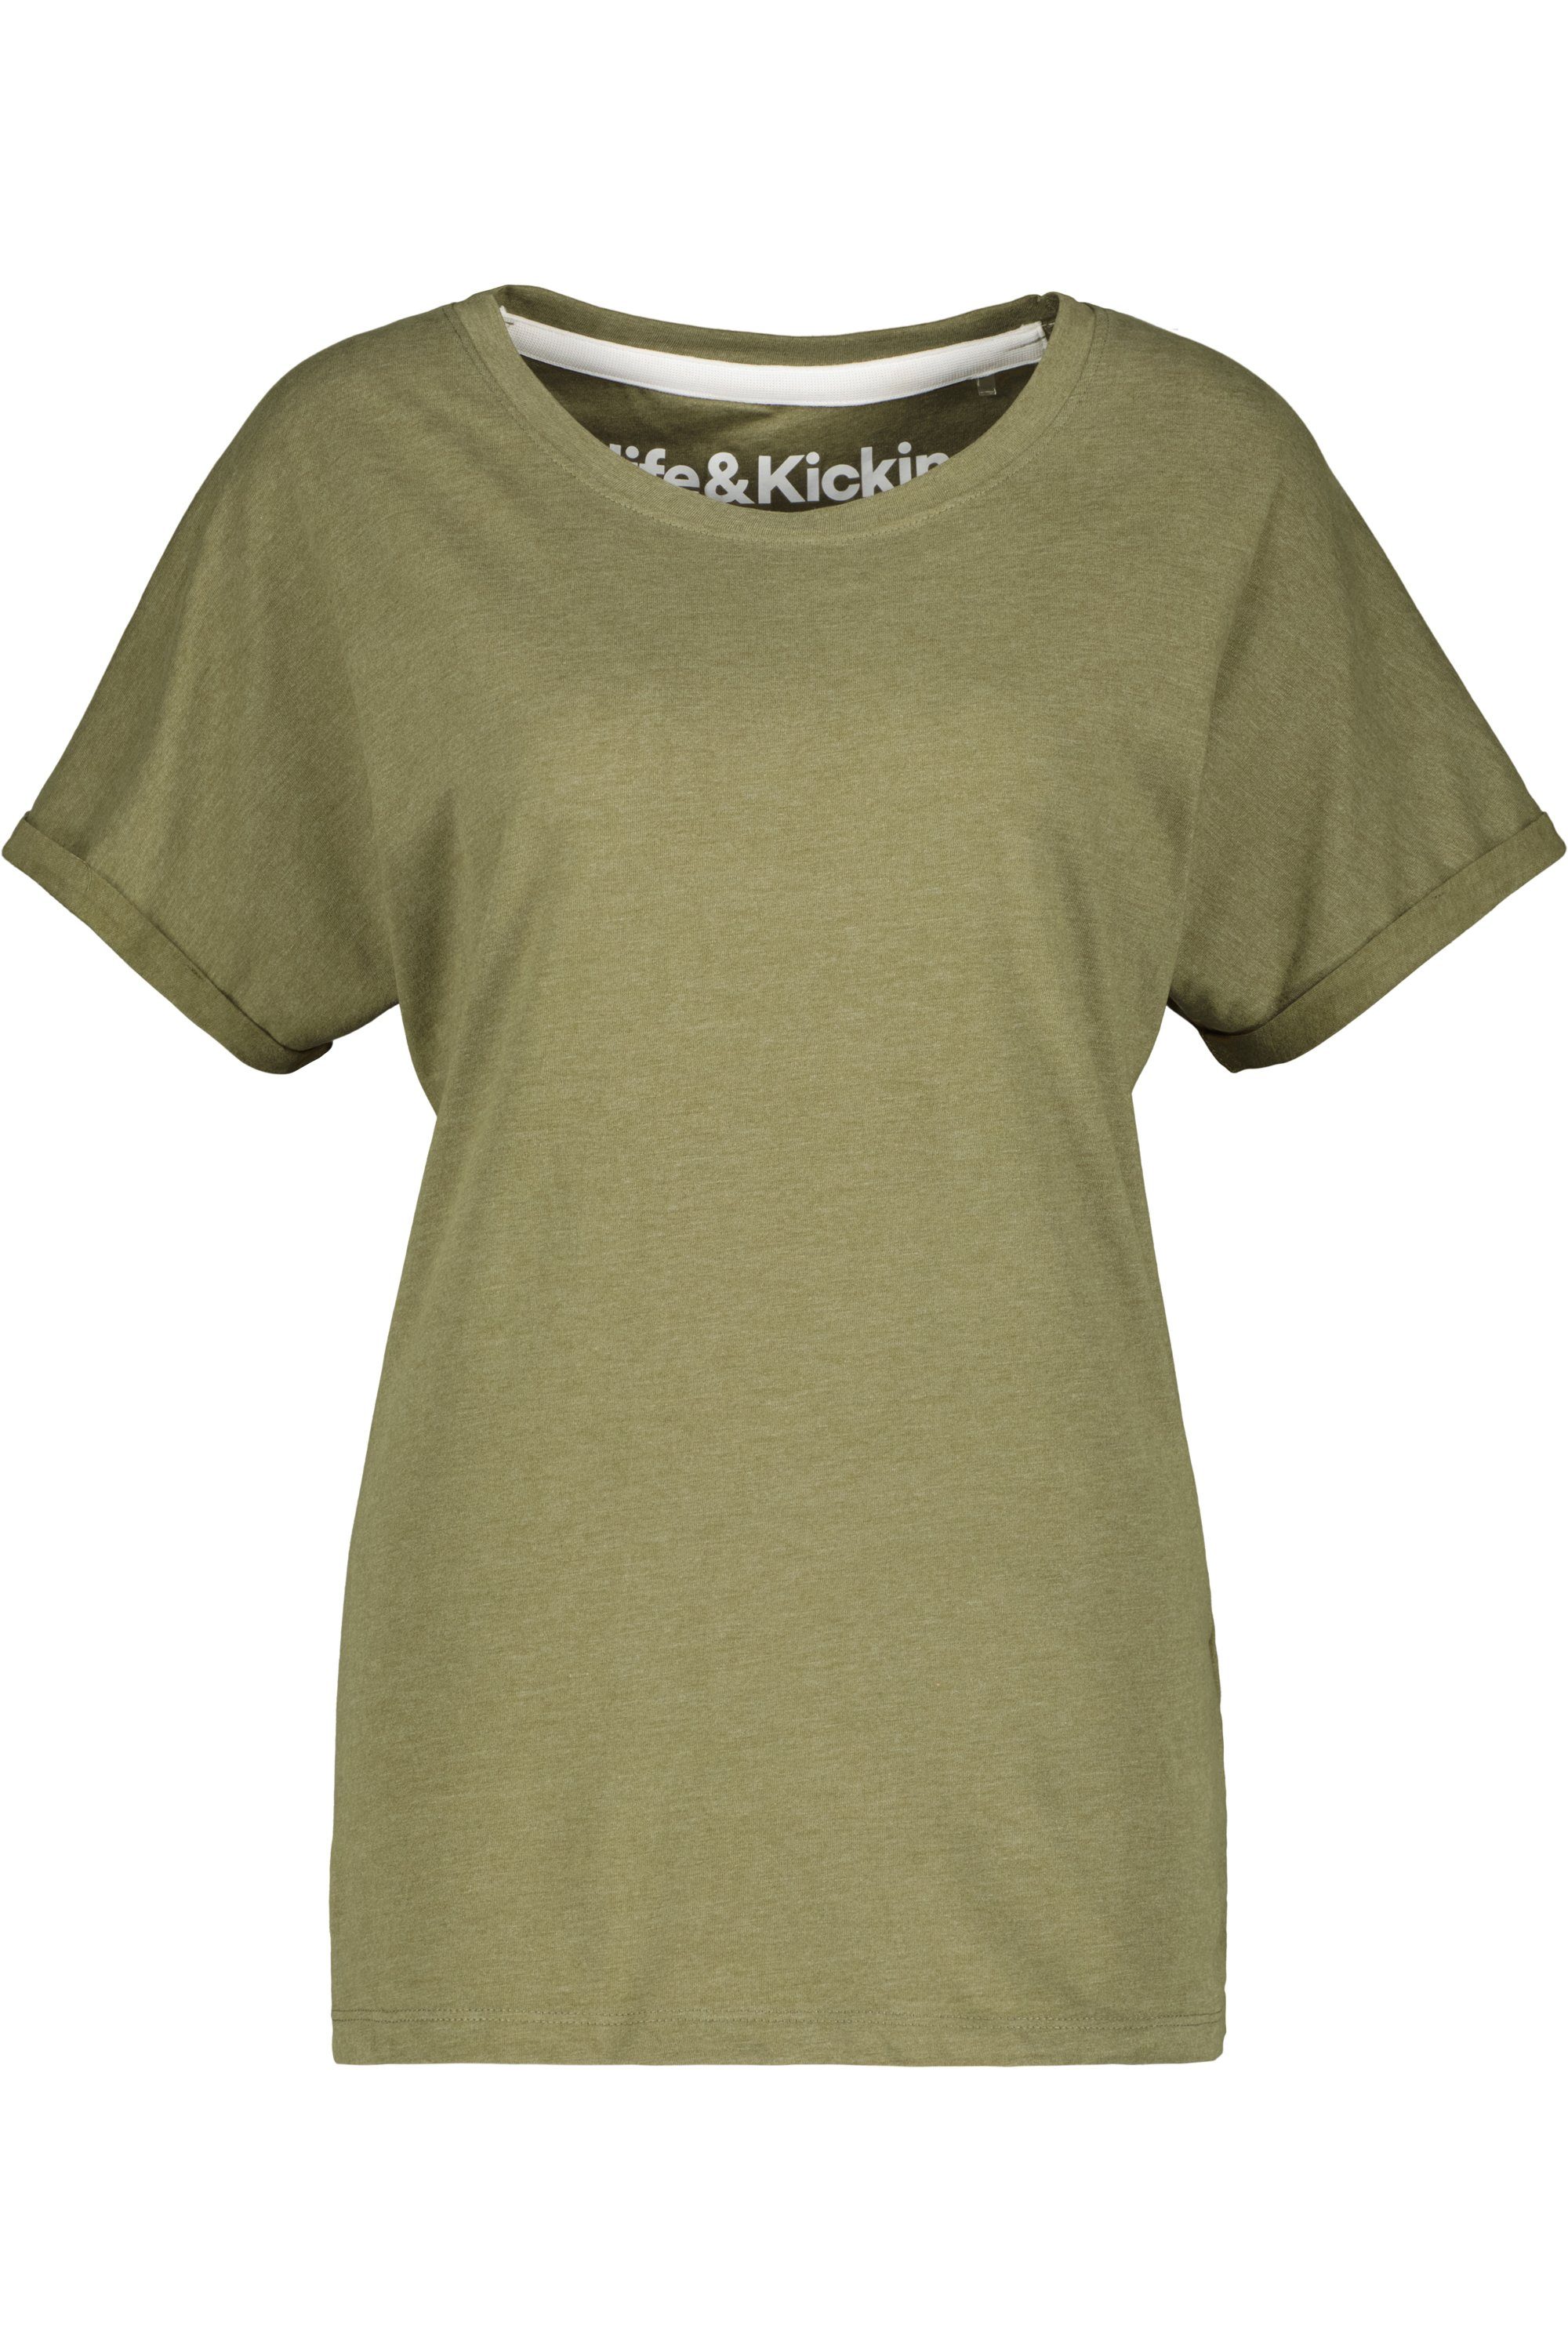 Alife & Kickin MalaikaAK Damen kelp A melange Rundhalsshirt Shirt sea Kurzarmshirt, Shirt